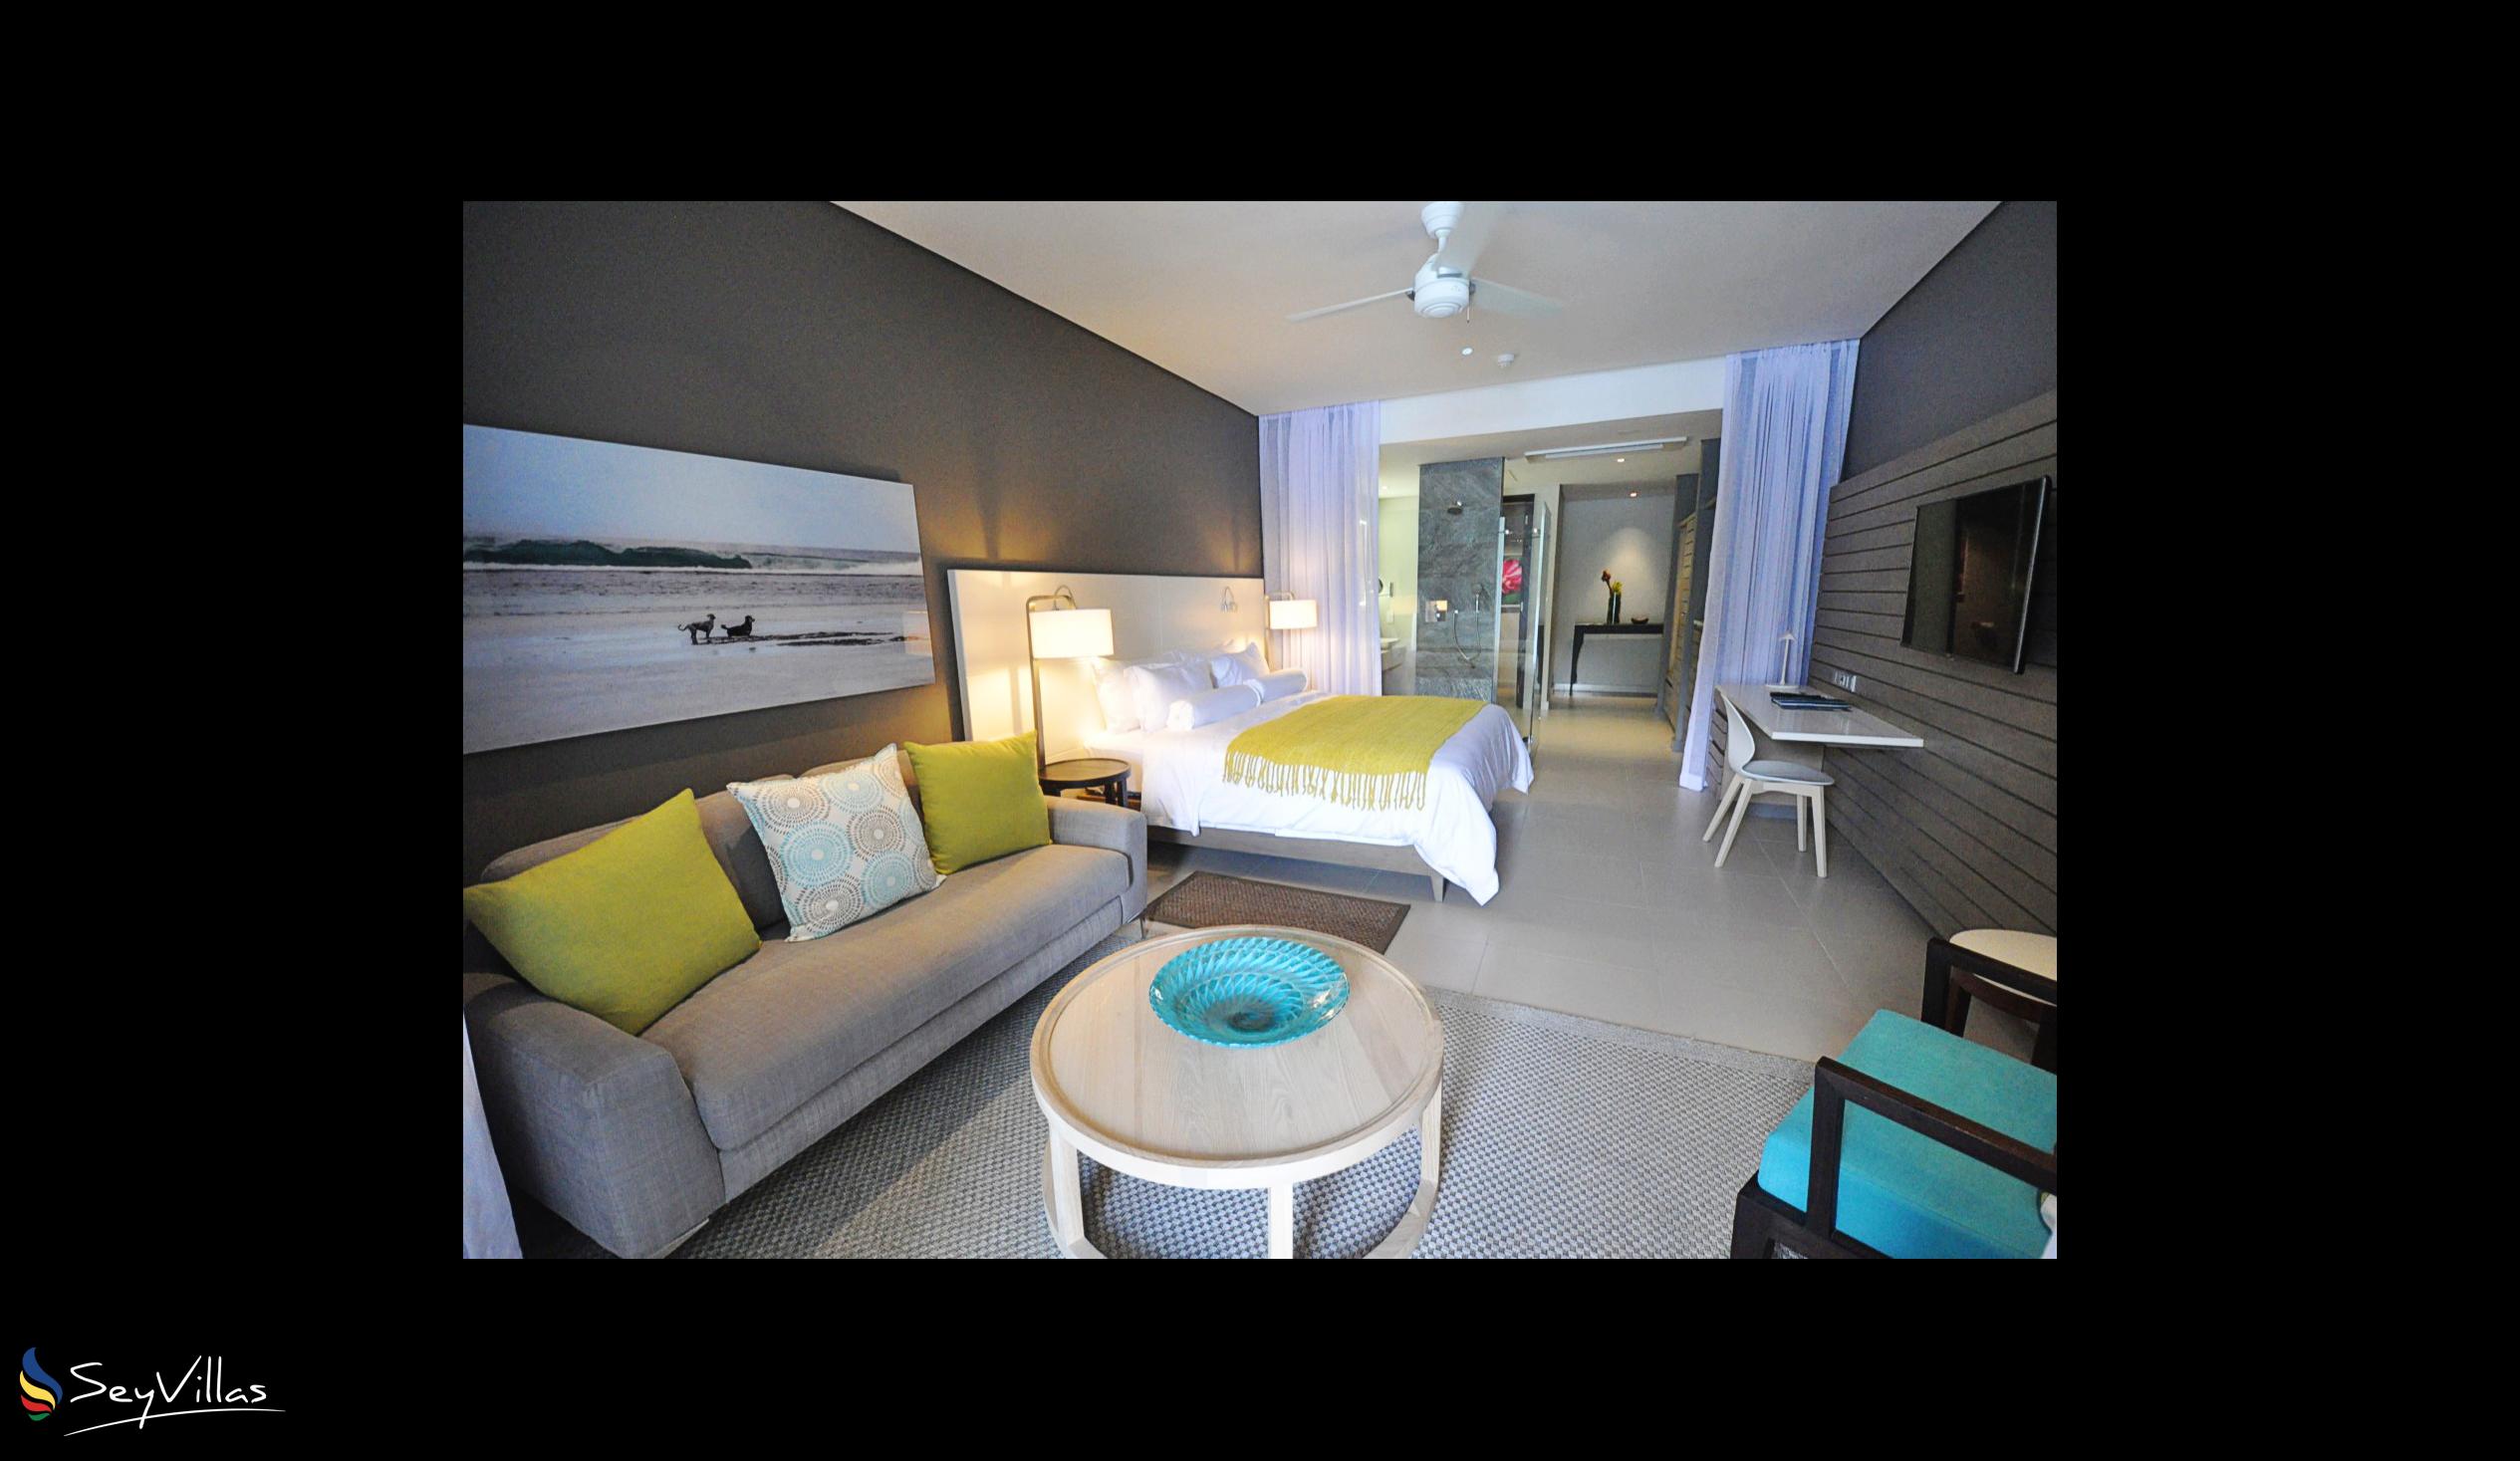 Photo 67: Eden Bleu Hotel - Luxury Suite with Marina View - Mahé (Seychelles)